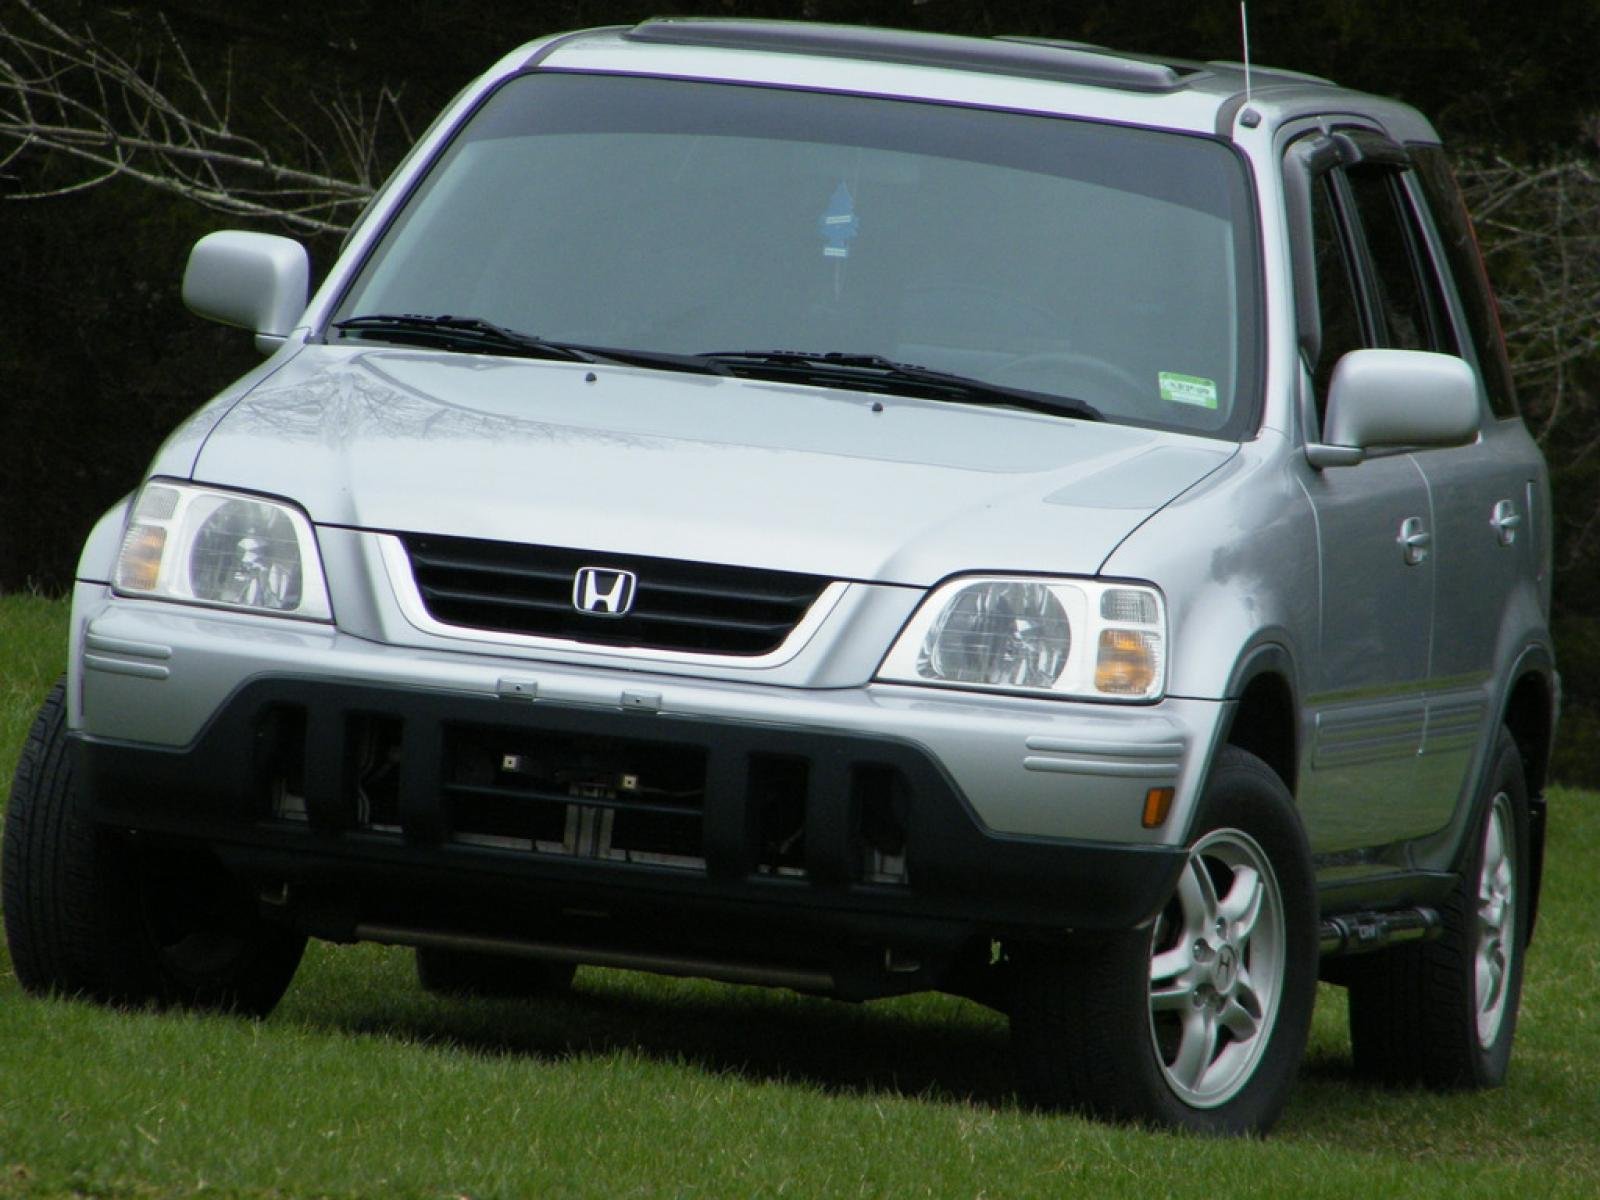 Хонда црв 2001 год. Honda CRV 2001. Honda CR-V 2001. Honda CR-V 1 2001. Honda CRV 2001 года.